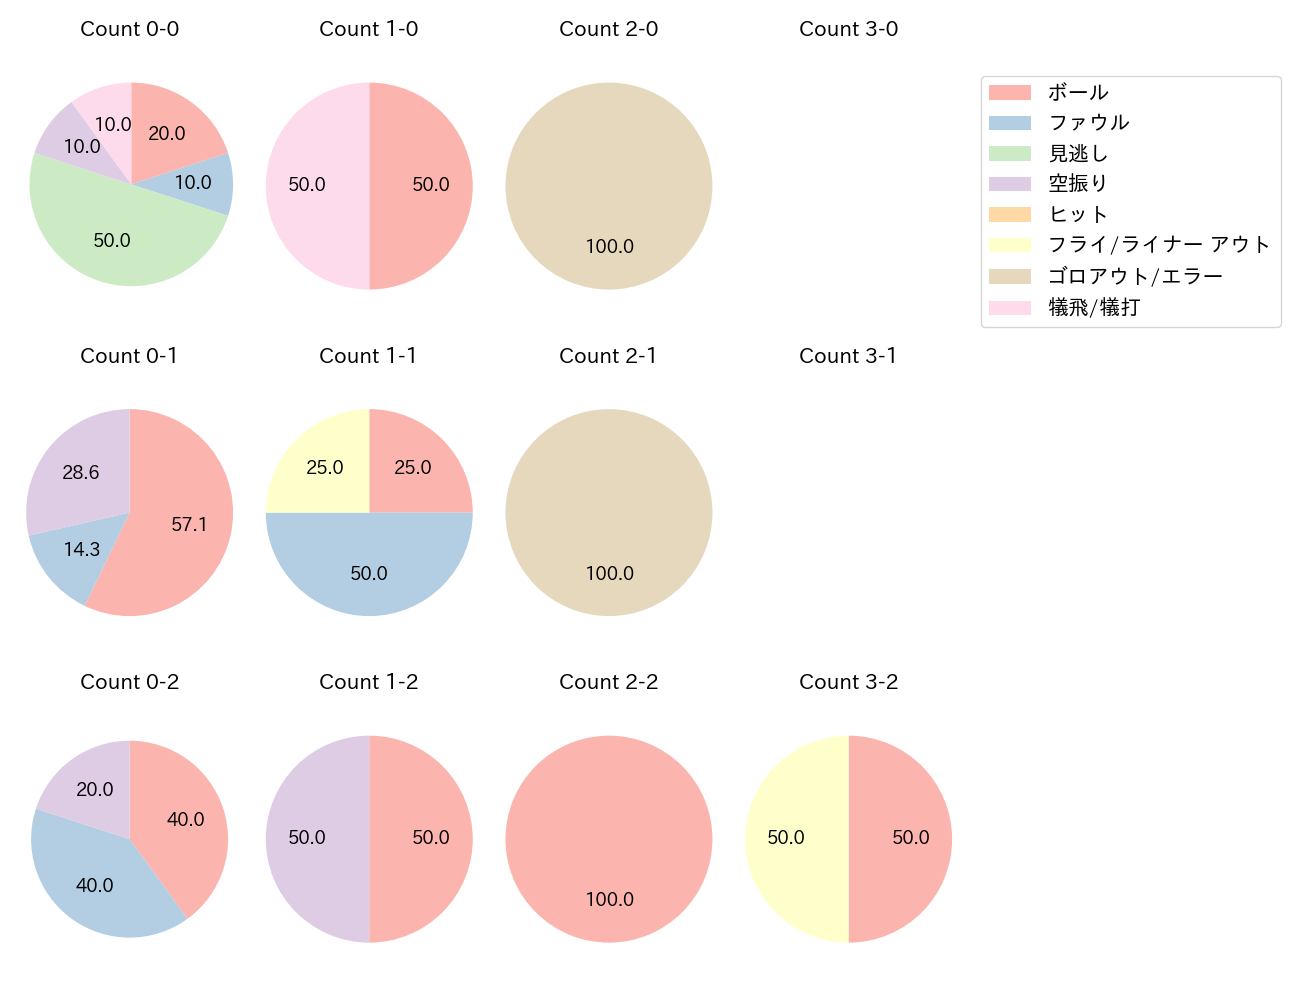 小川 龍成の球数分布(2022年7月)